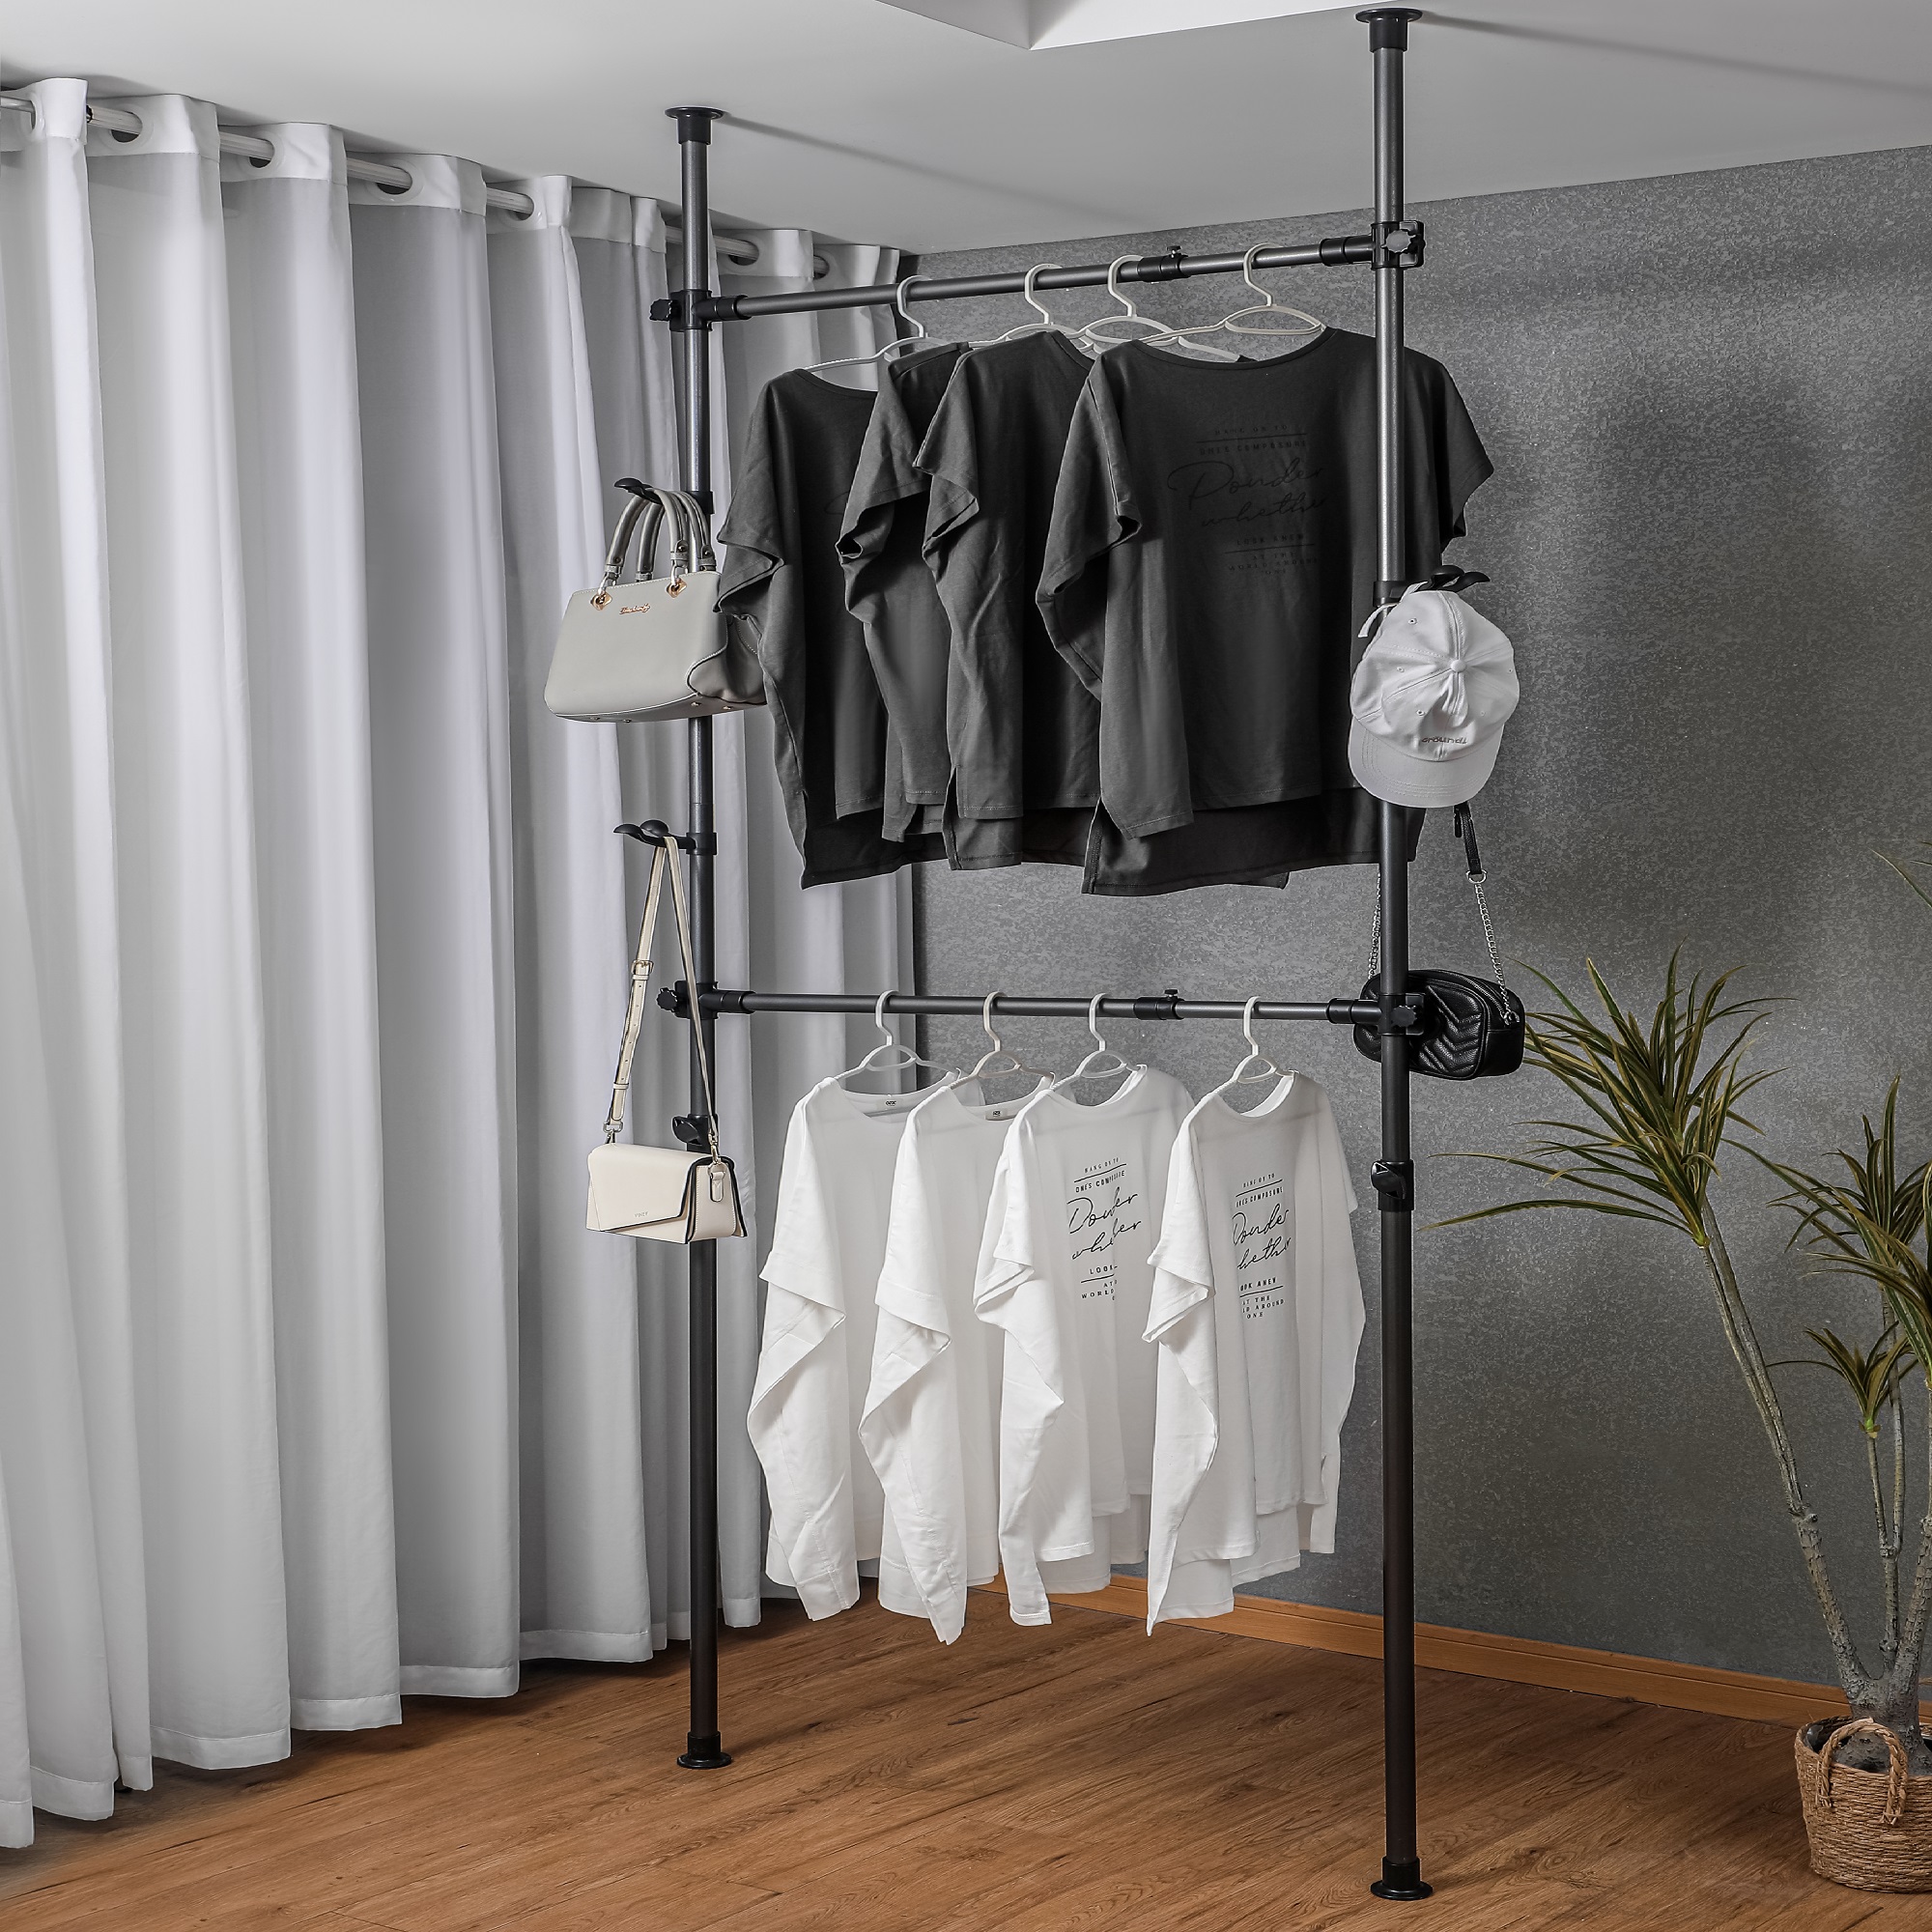 Adjustable Clothing Rack, Double Rod Clothing Rack, 2 Tier Clothes Rack, Adjustable Hanger for Hanging Clothes, Closet Rack, Freestanding,white